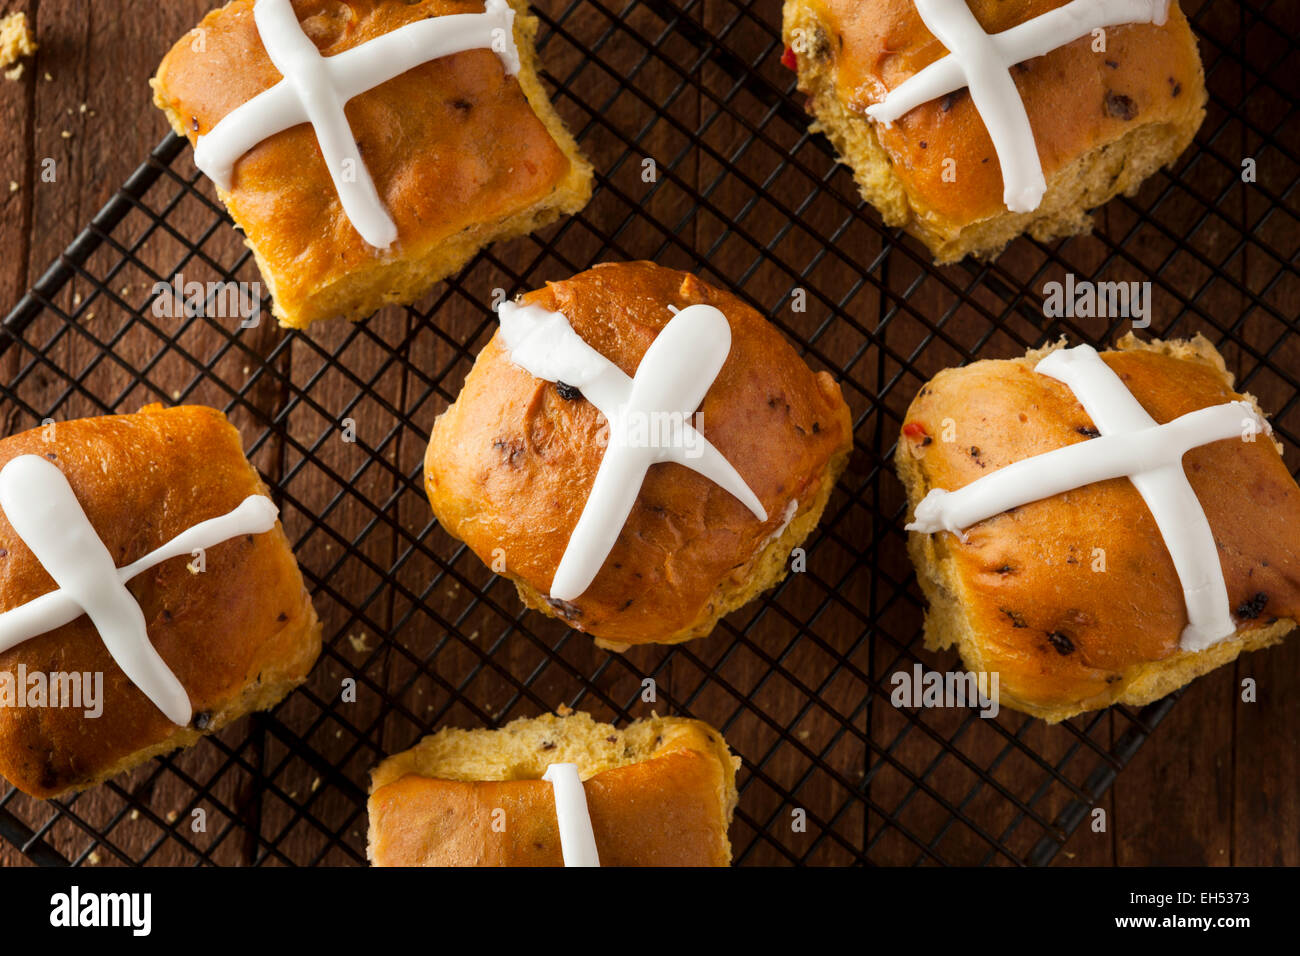 Homemade Hot Cross Buns Ready for Easter Stock Photo